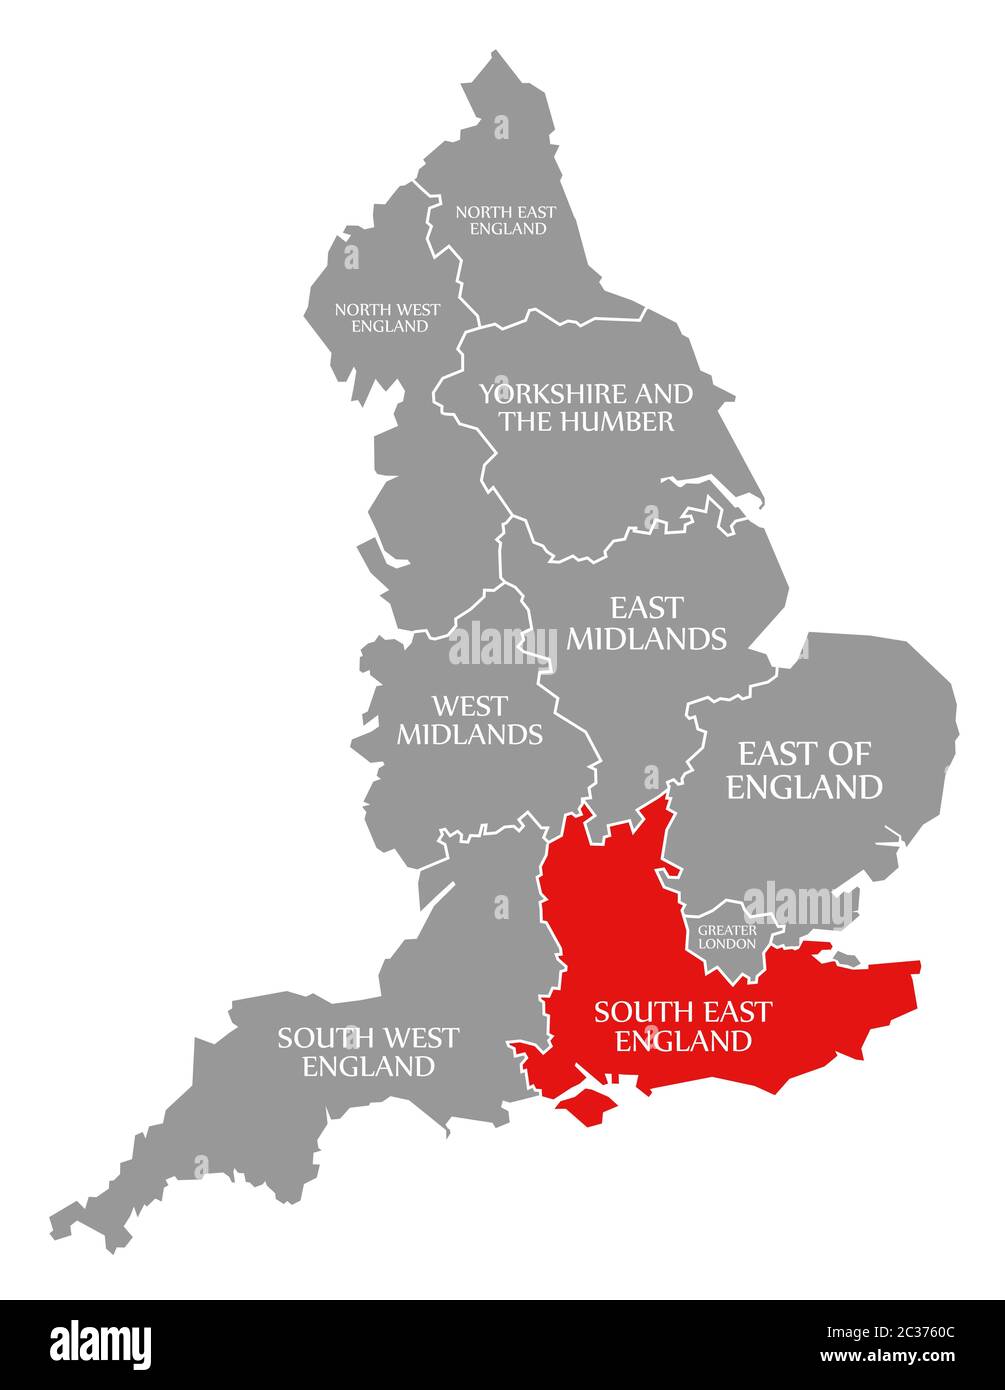 South East England rot hervorgehoben Karte von England Großbritannien Stockfoto